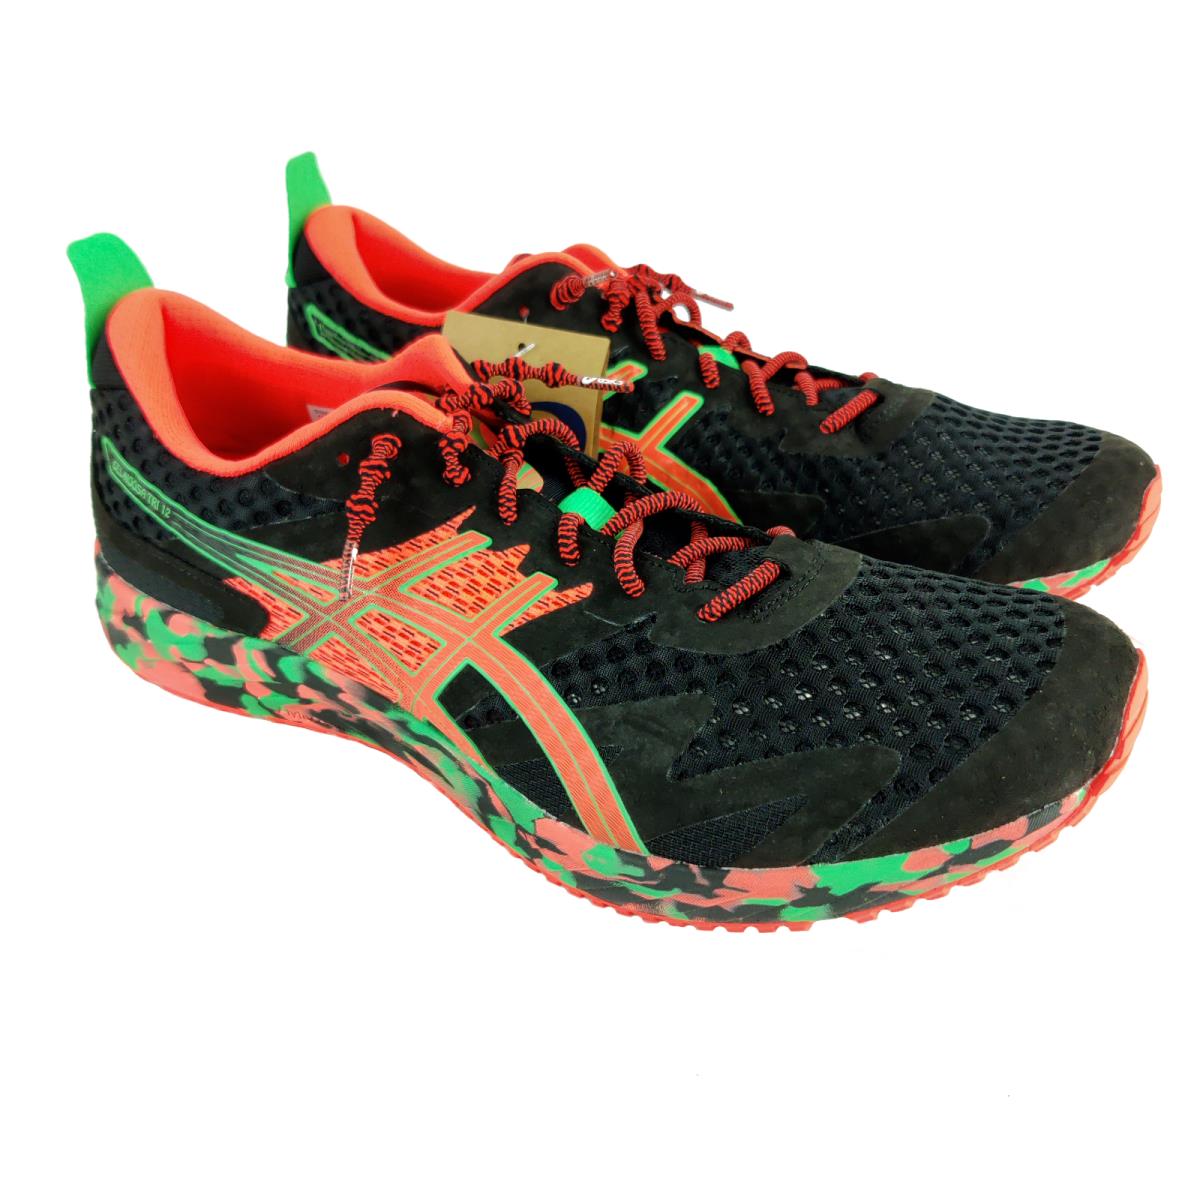 Asics Gel-noosa Tri 12 Running Shoes Black Pink Flash Coral Mens Size 11.5